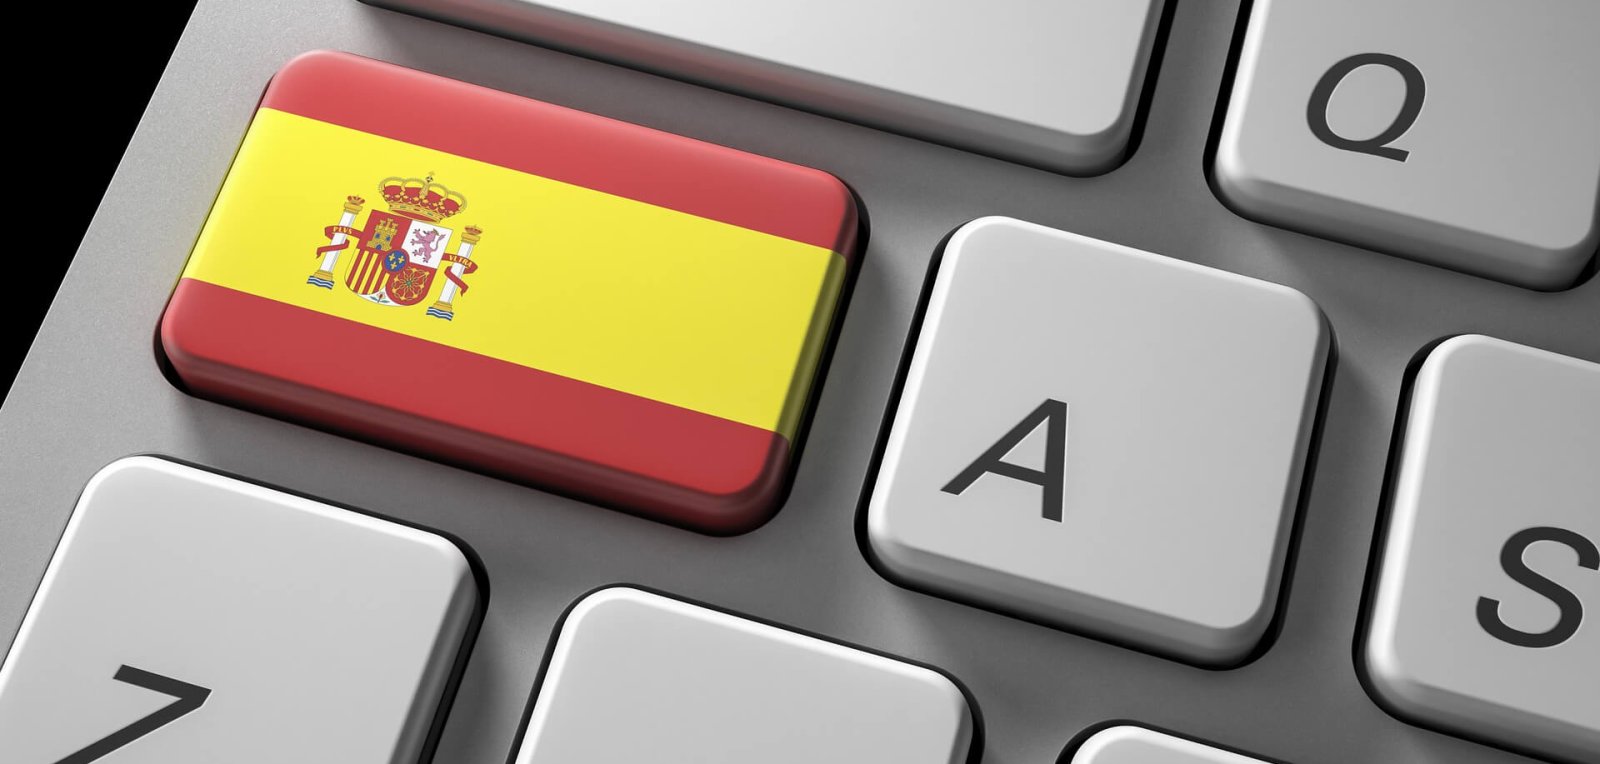 Spanish flag button on computer keyboard